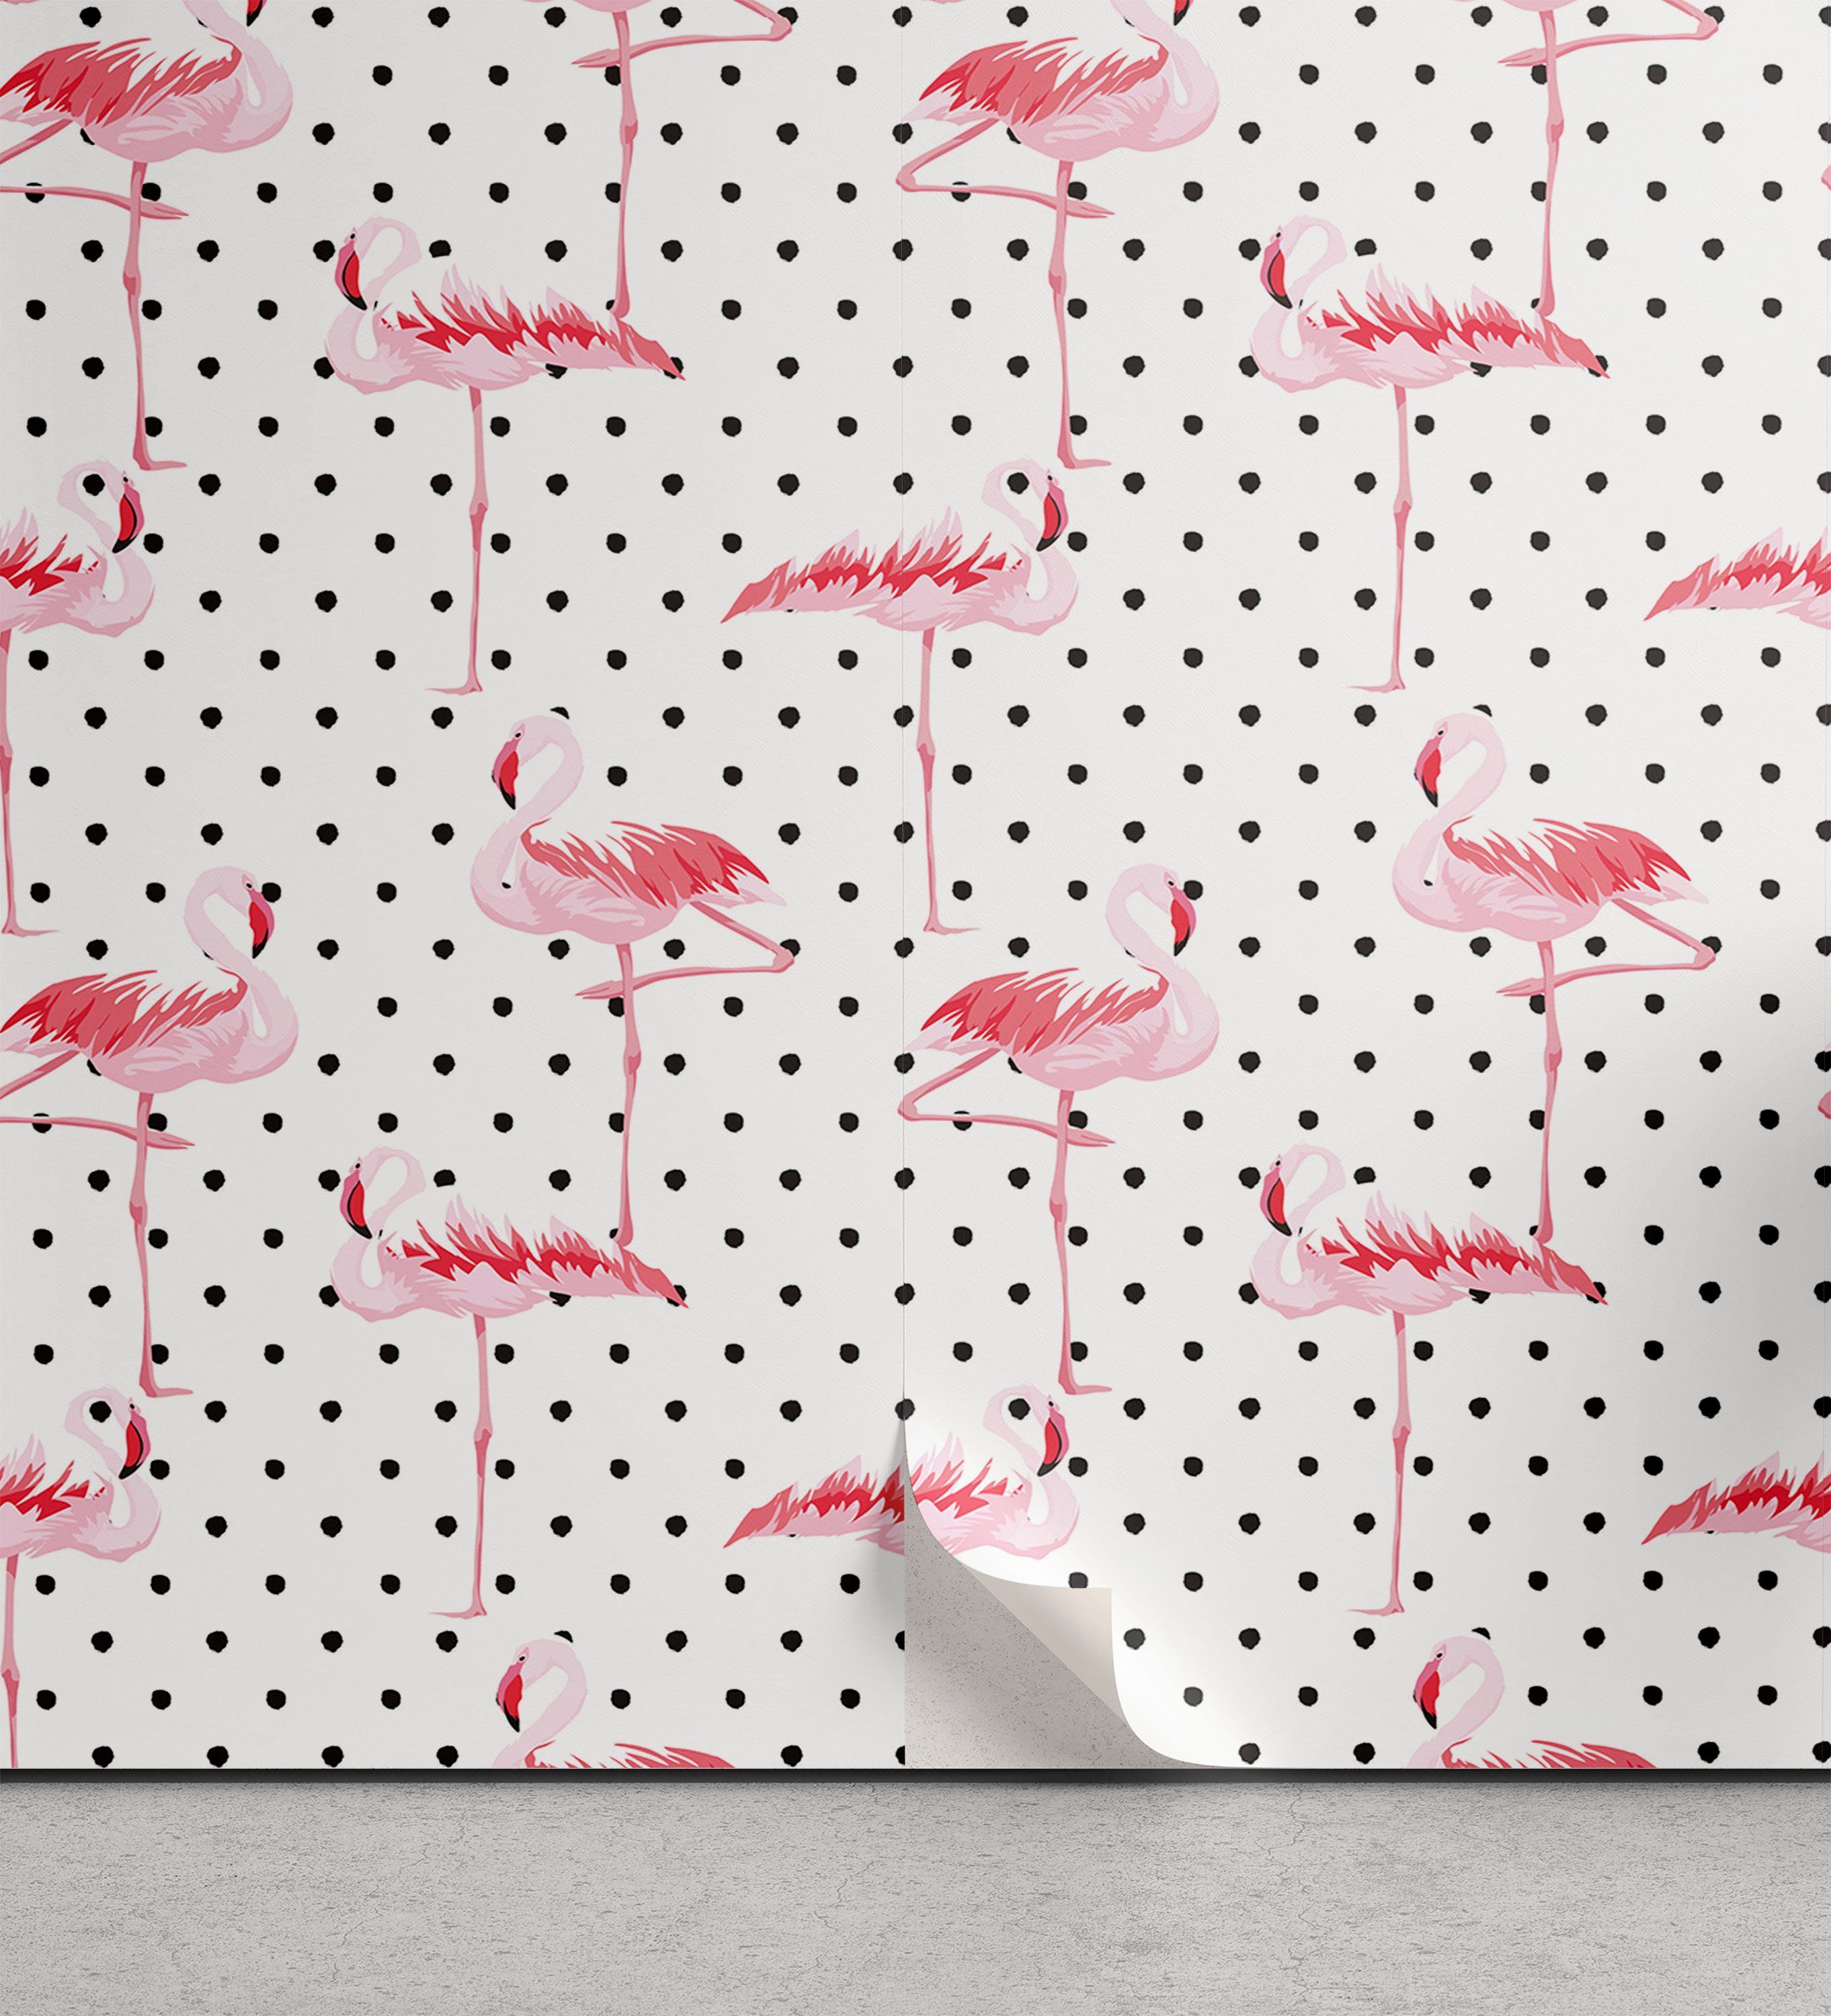 Abakuhaus Vinyltapete selbstklebendes Wohnzimmer Küchenakzent, Vögel Retro Tupfen Flamingo